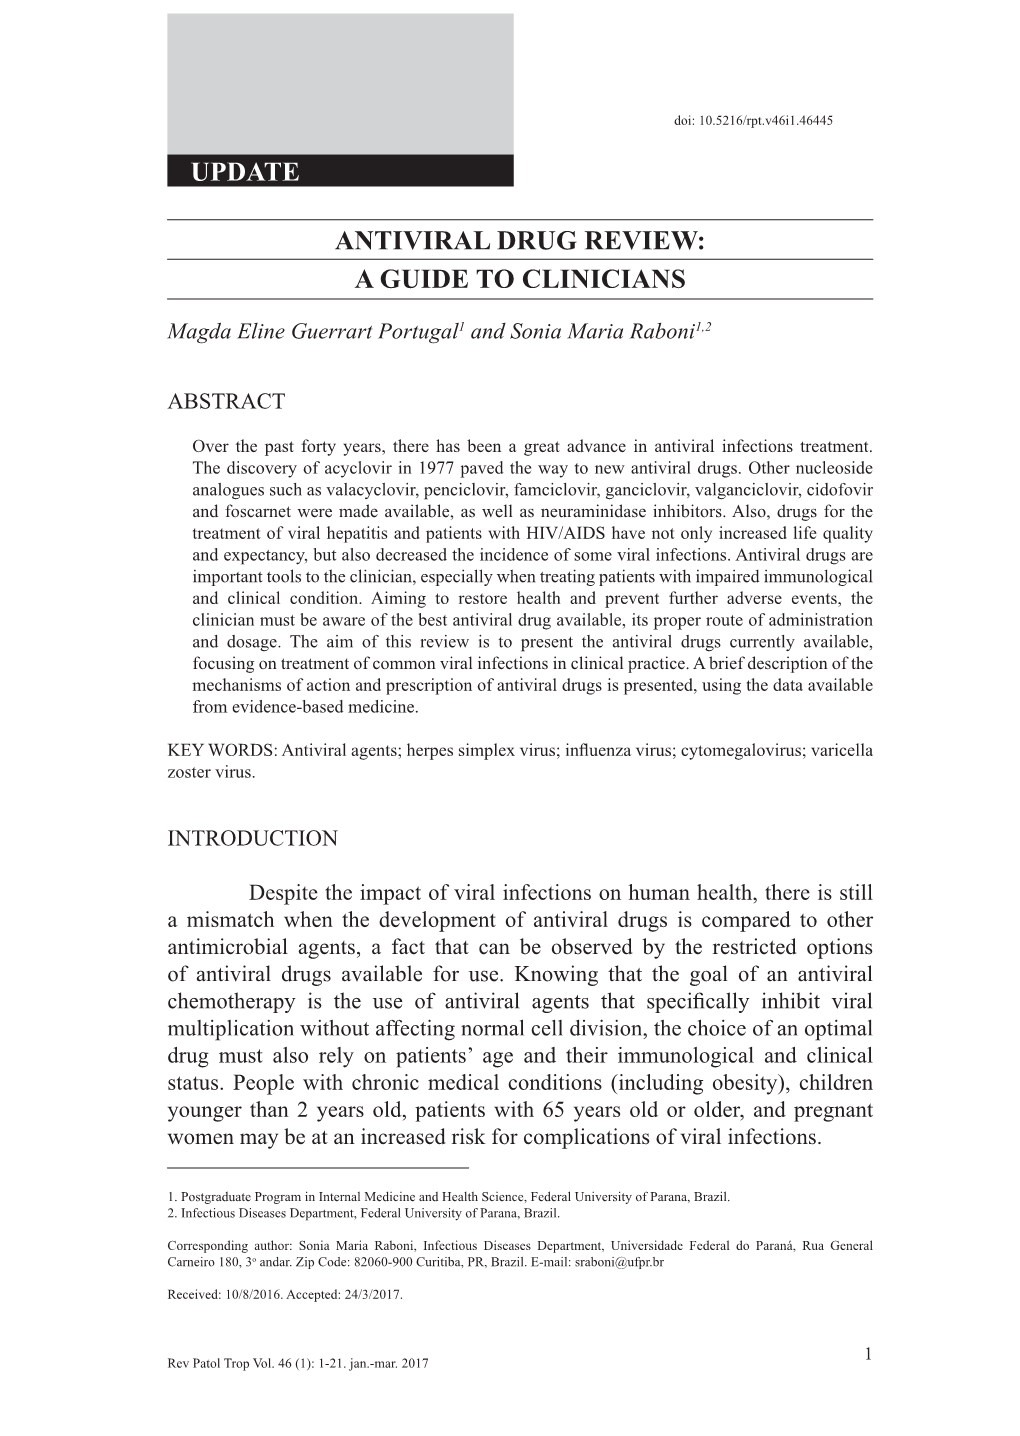 UPDATE Antiviral Drug Review